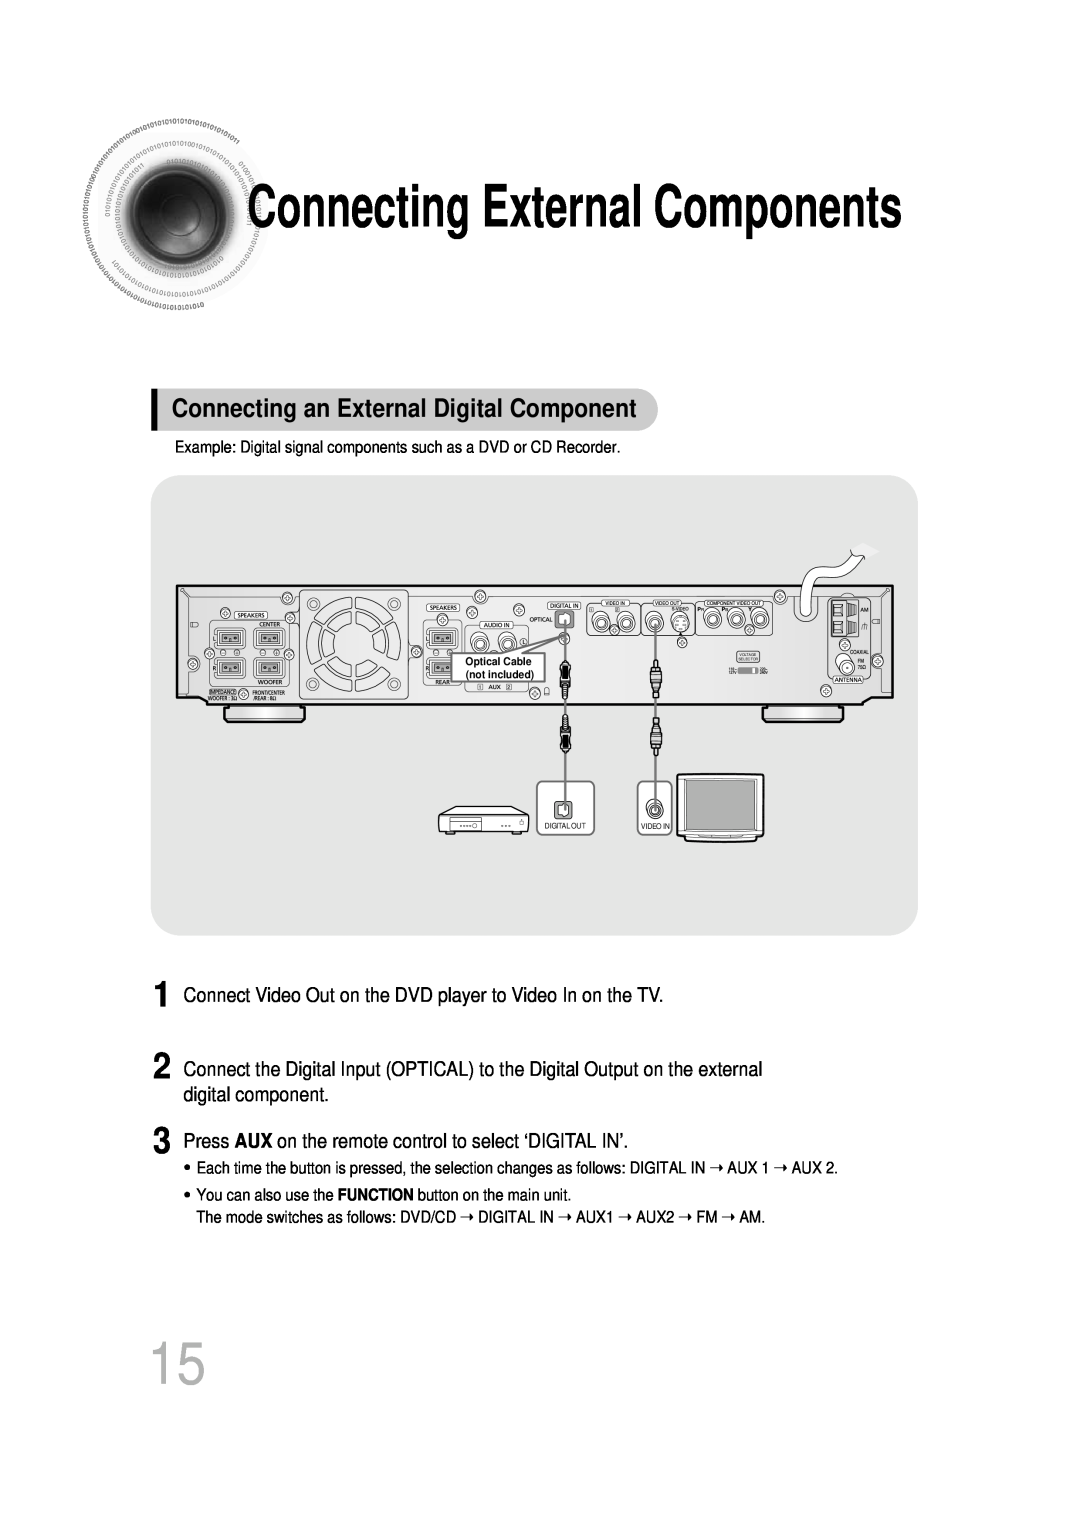 Samsung HT-DB350, HT-DB1650 ConnectingExternal Components, 1 2 3, Connecting an External Digital Component 